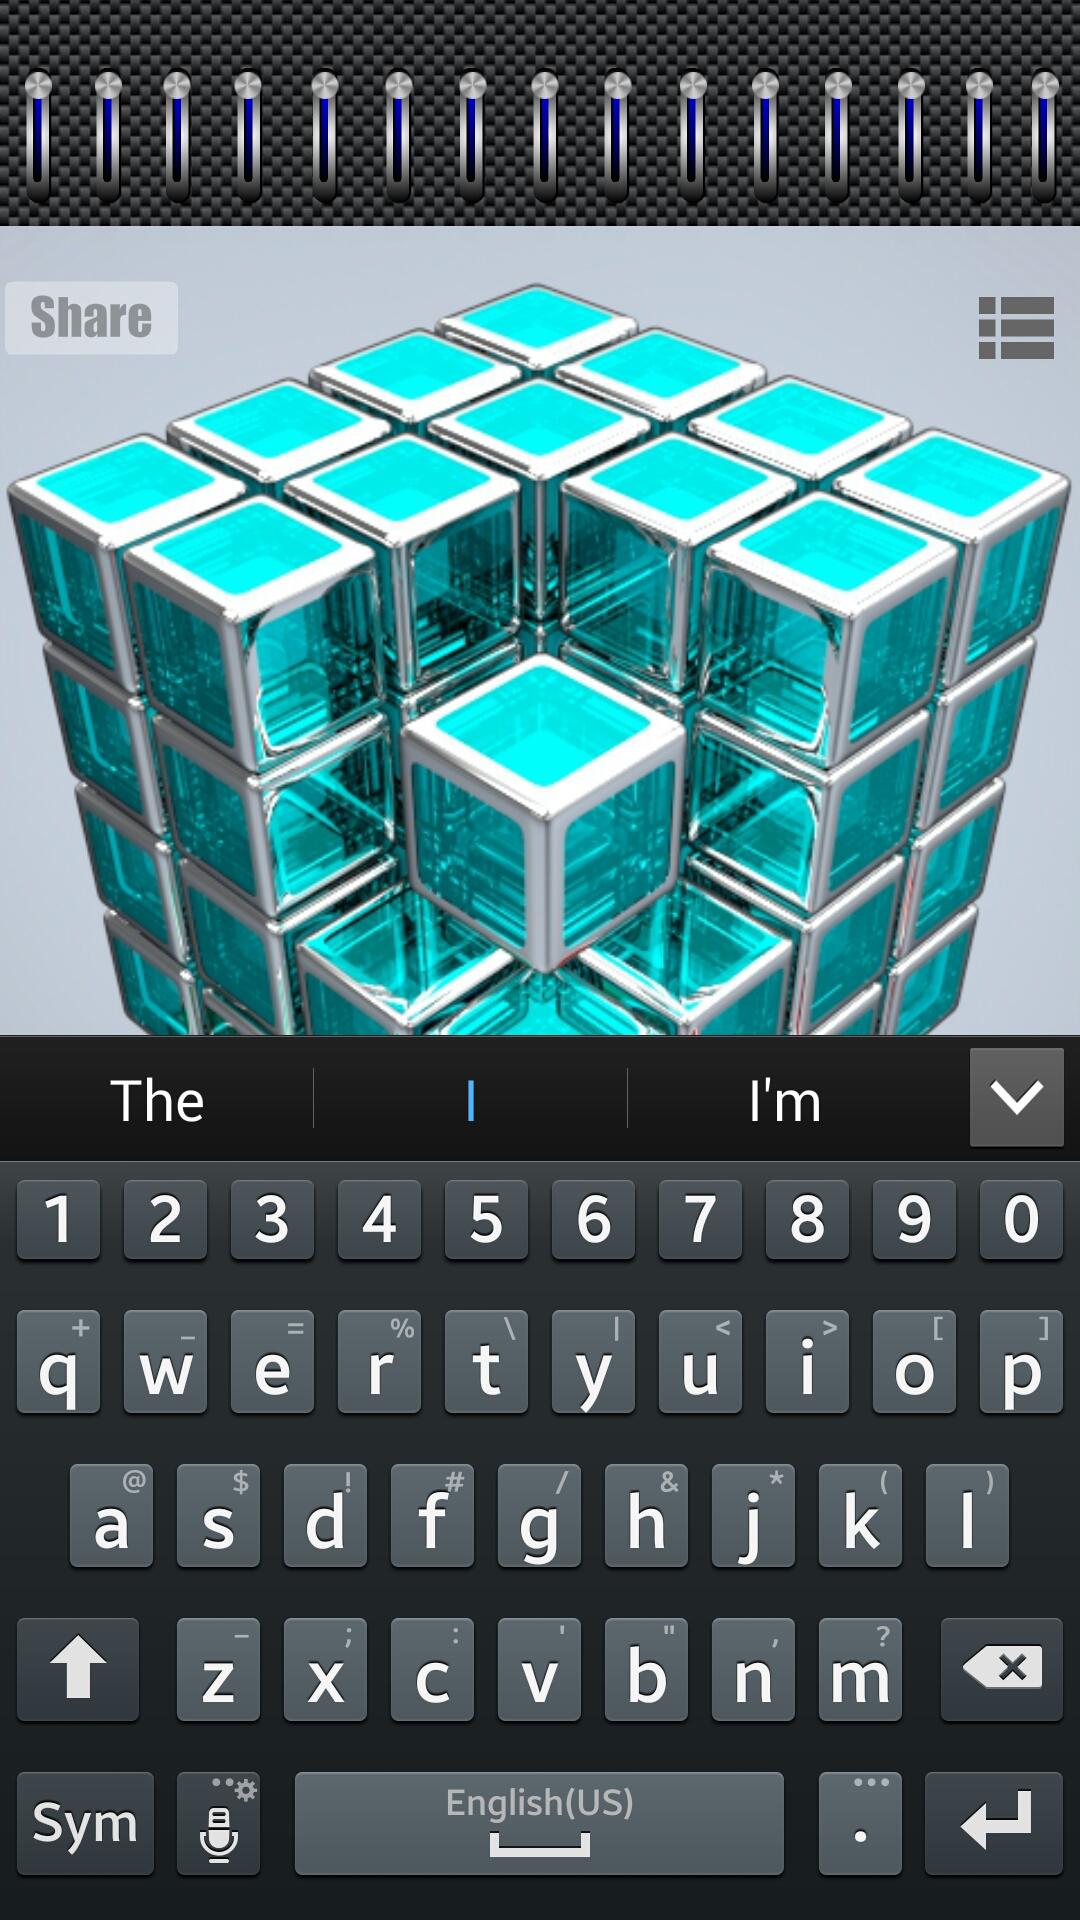 Cube 2.0